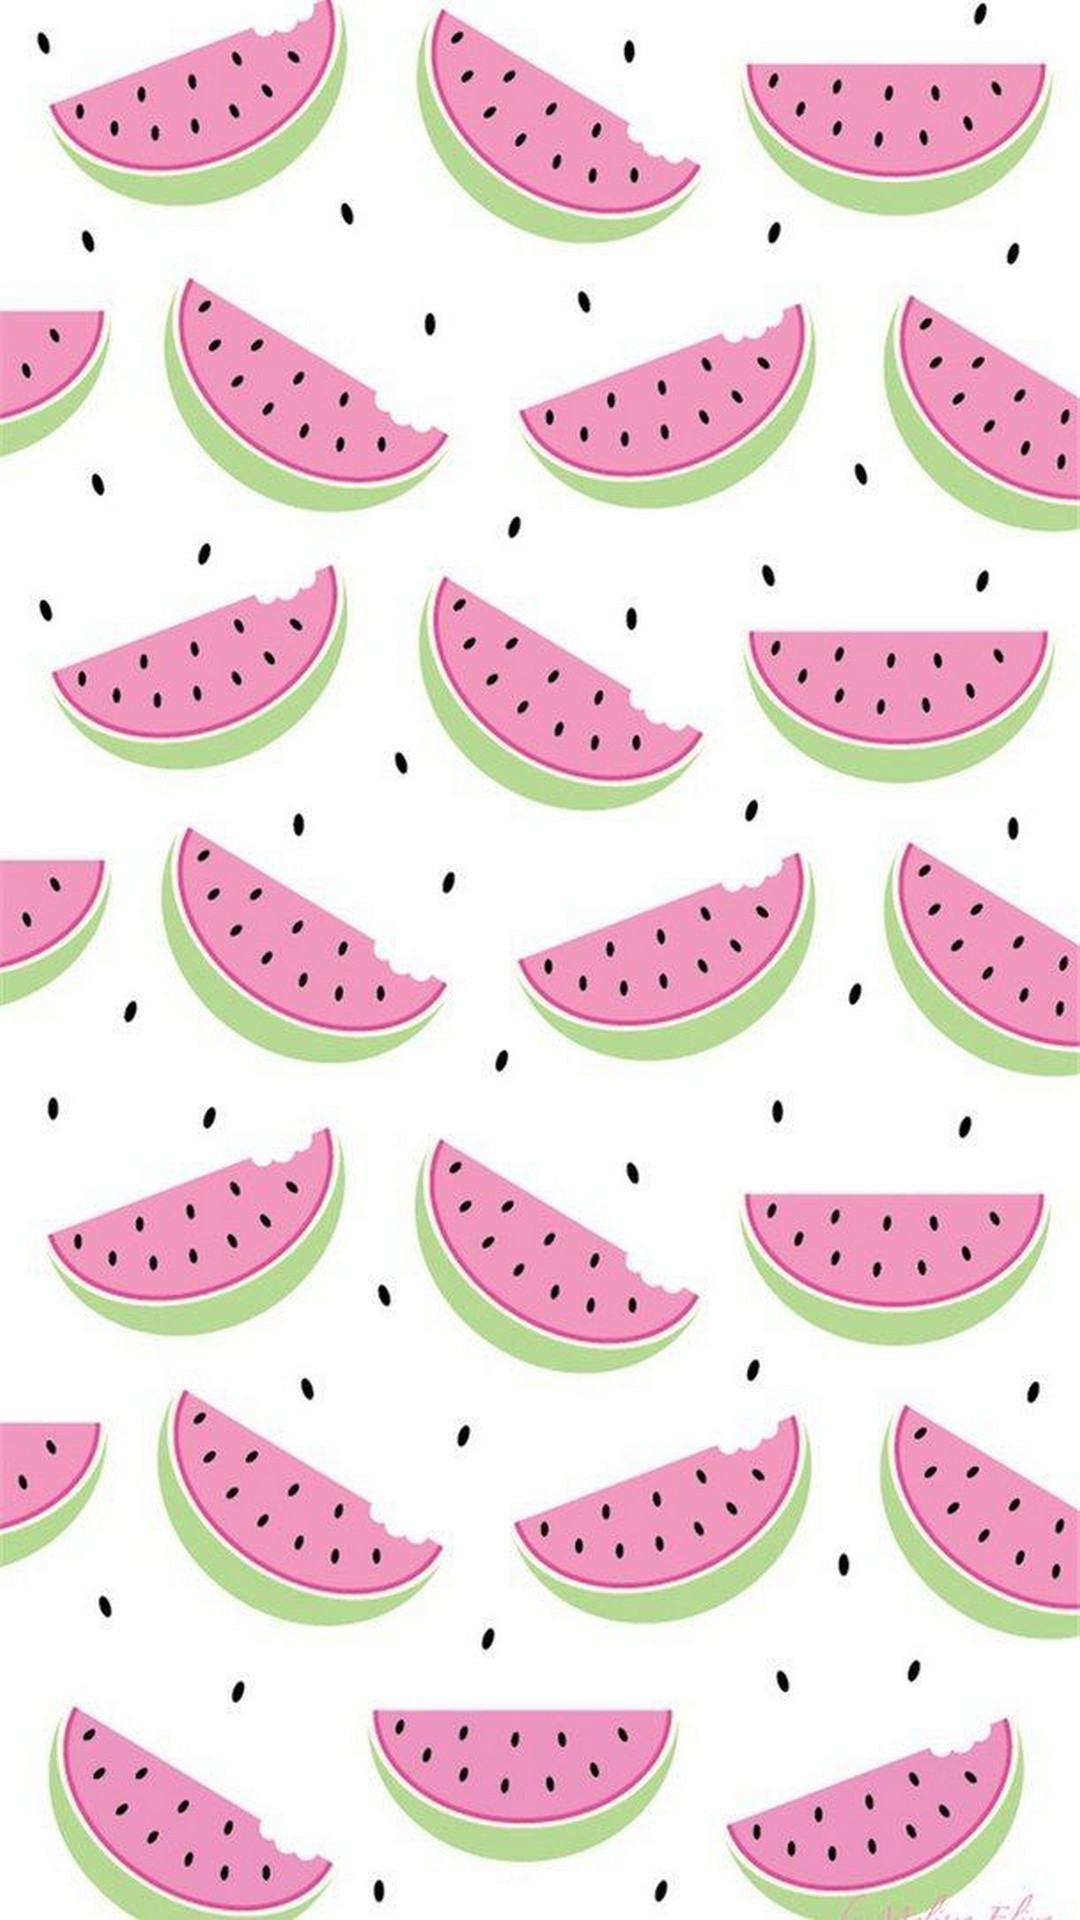 Watermelon Cute Girly Wallpaper iPhone 1080x1920